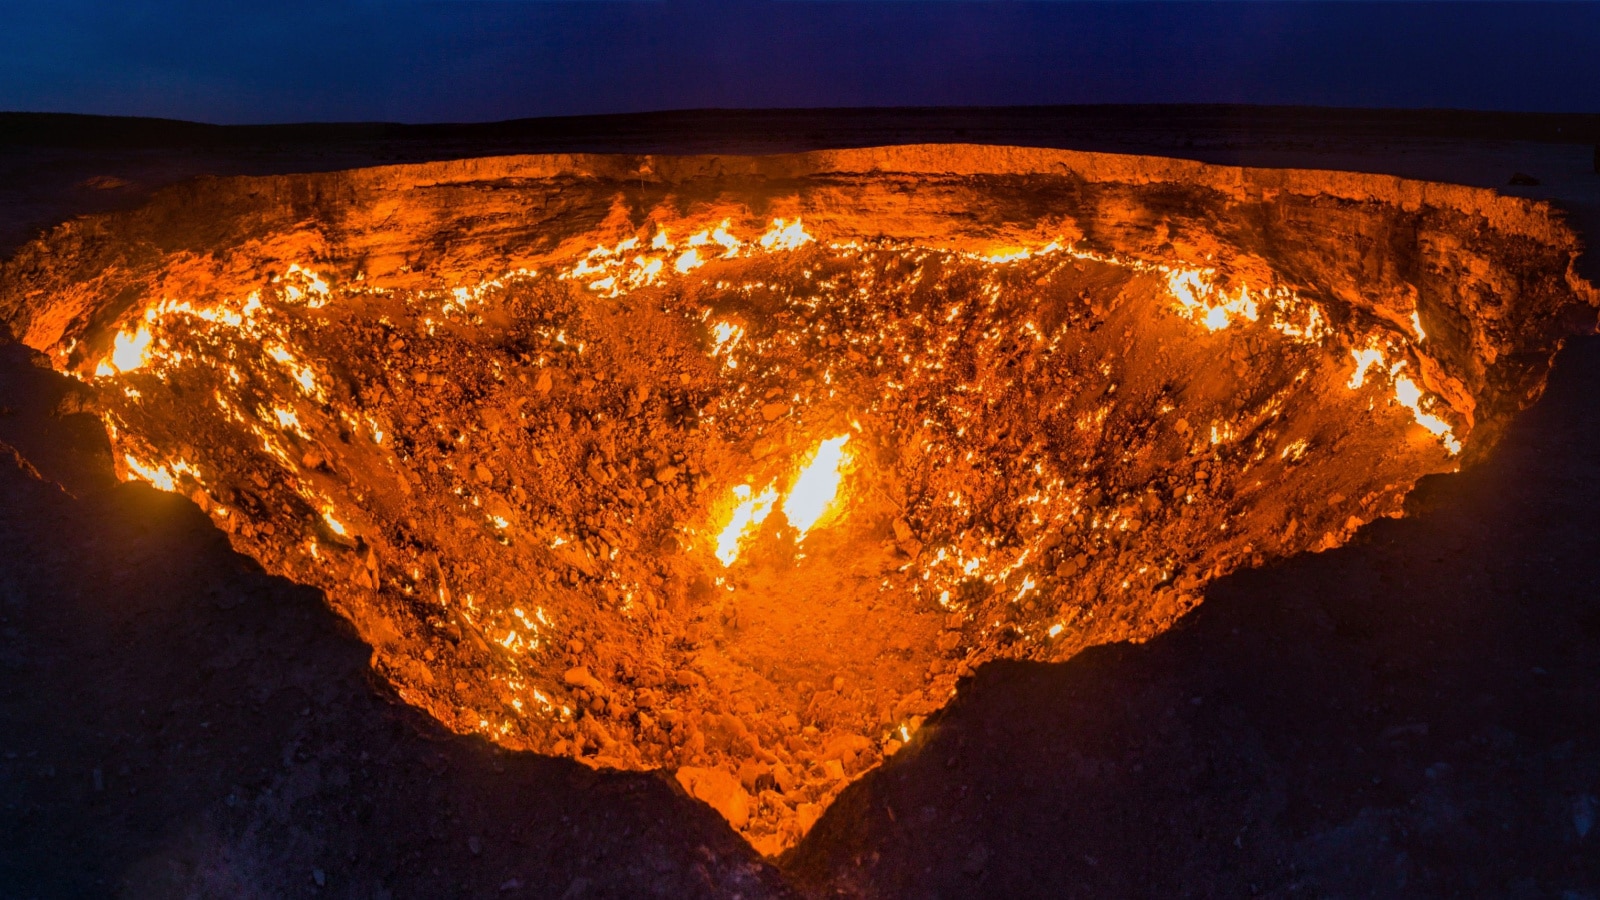 Darvaza (Derweze) gas crater (called also The Door to Hell) in Turkmenistan